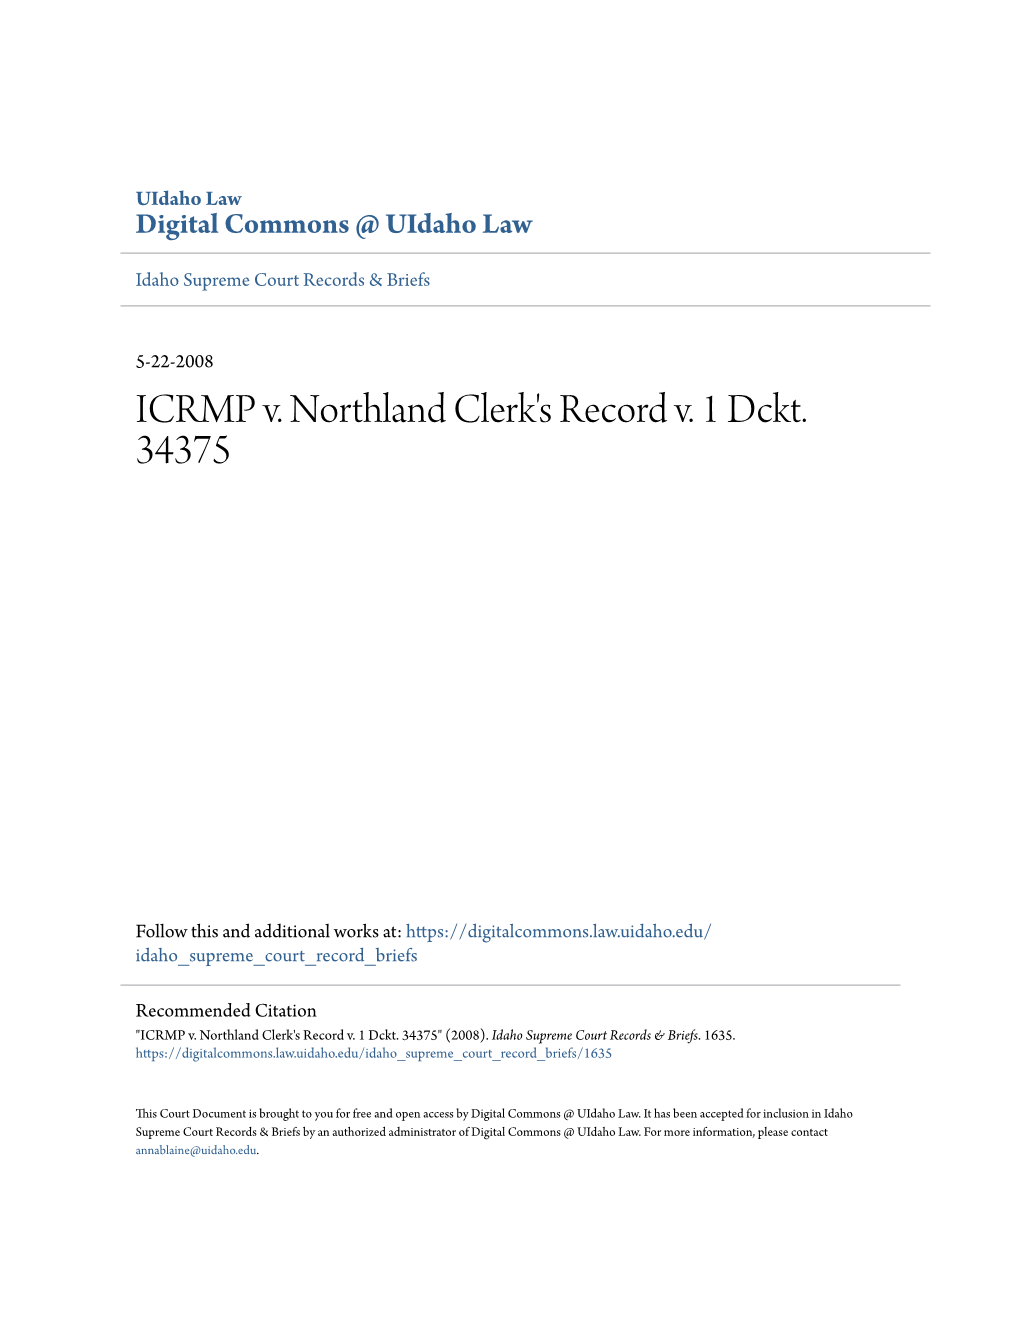 ICRMP V. Northland Clerk's Record V. 1 Dckt. 34375